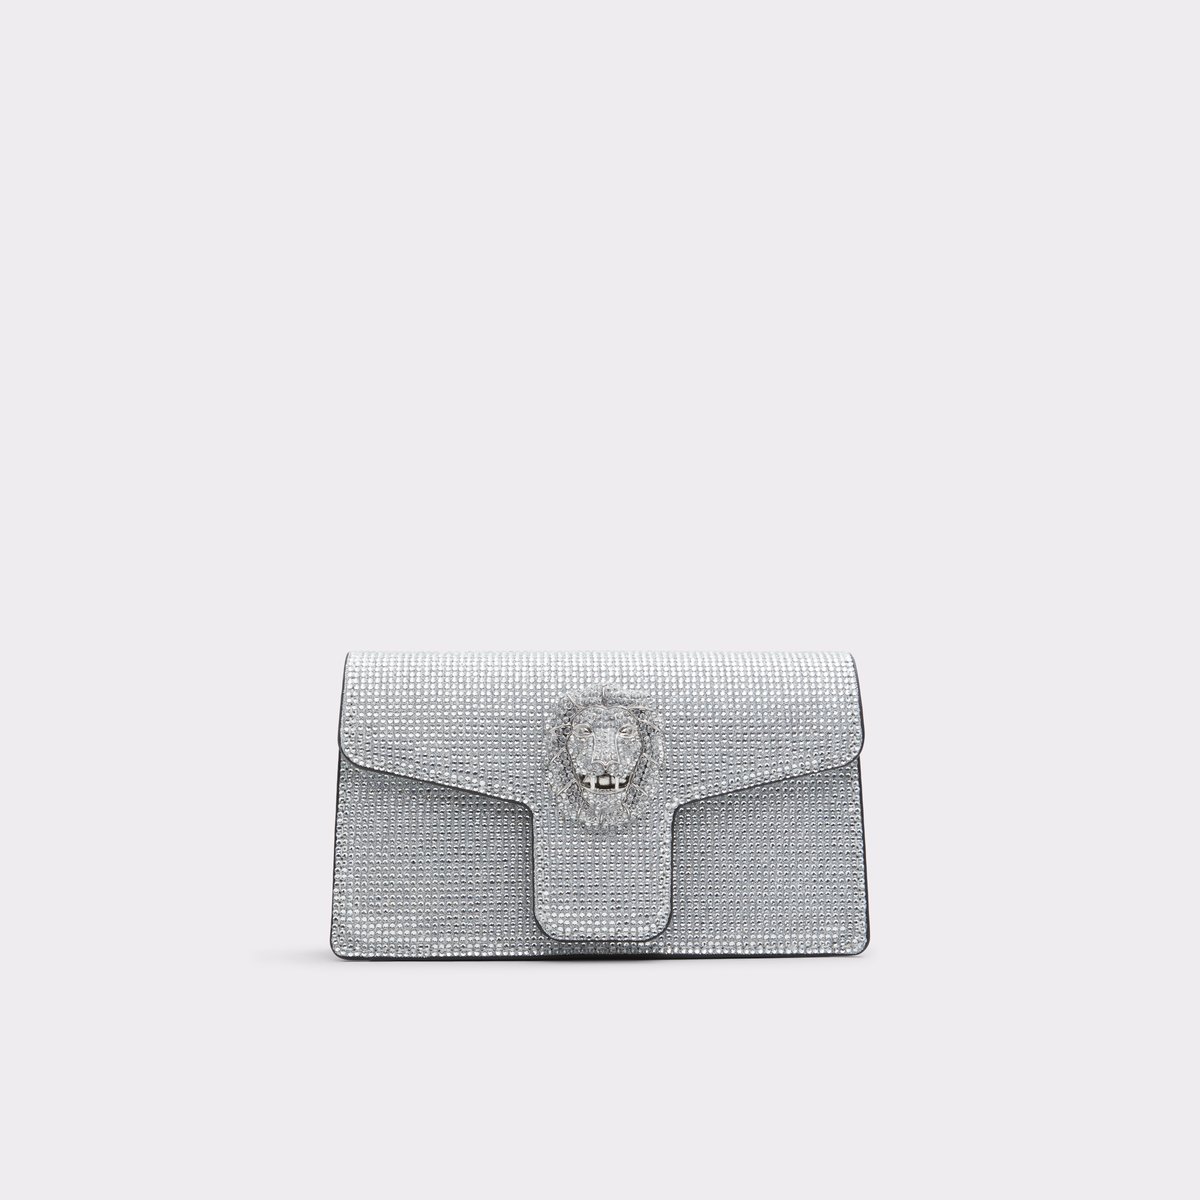 Wilathax Light Silver Women's Mini bags | ALDO US